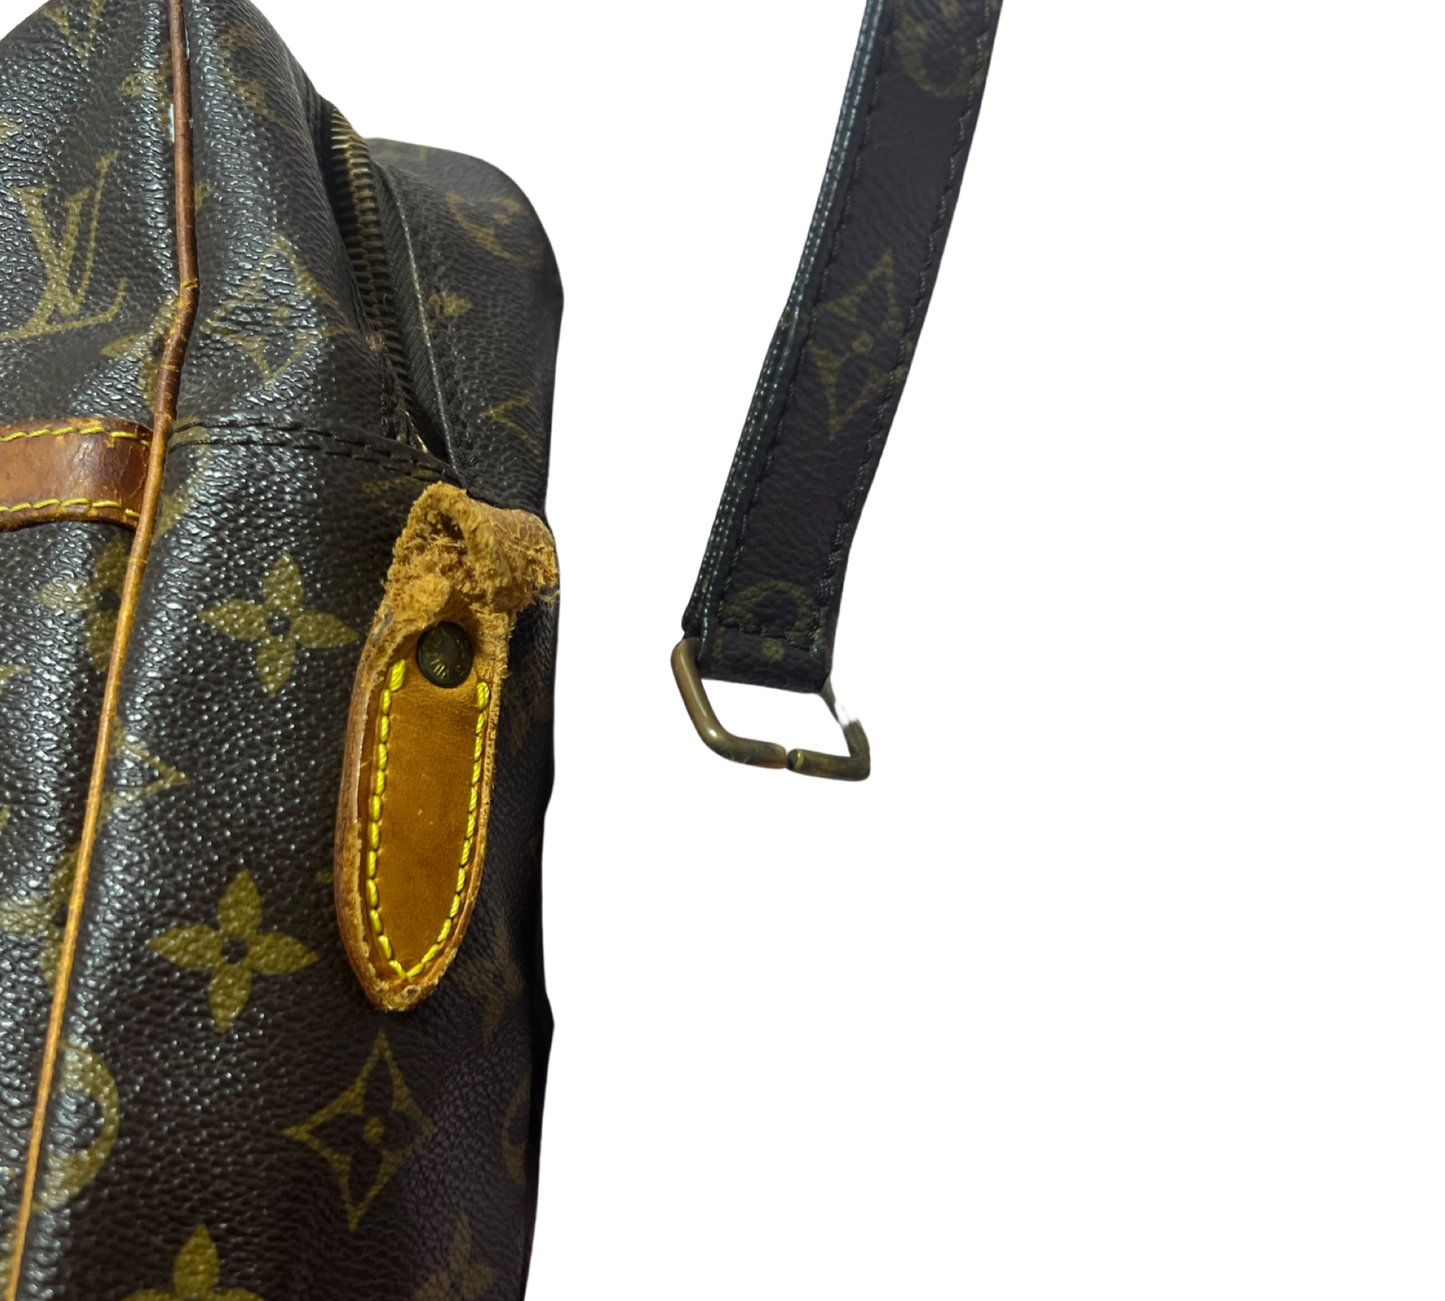 Vintage Louis Vuitton crossbody man bag